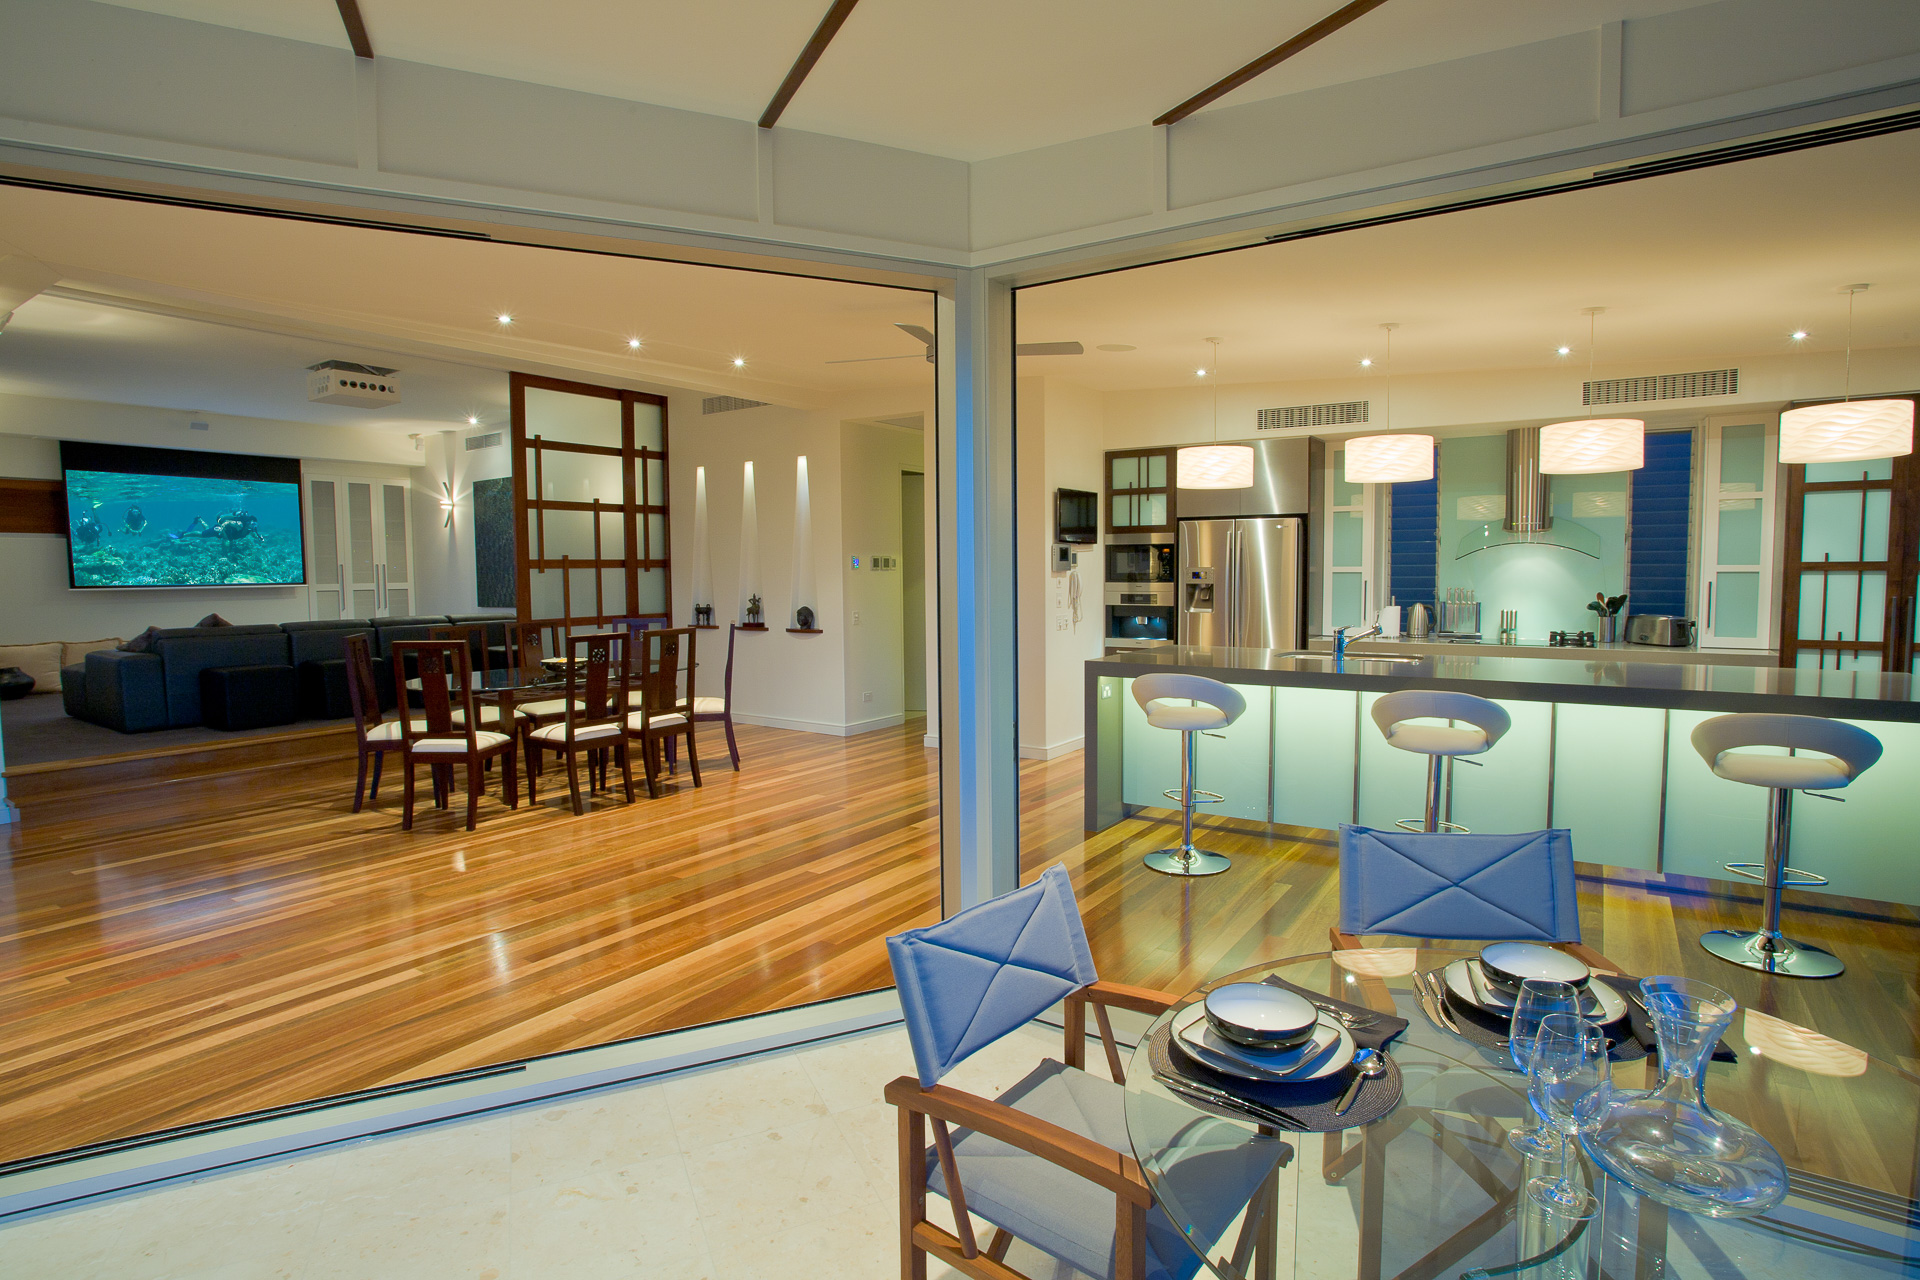 kitchen, 2 pack, glass, miele, japanese kitchen, Resort Style Modern House, luxury interior, caesarstone, minka joinery